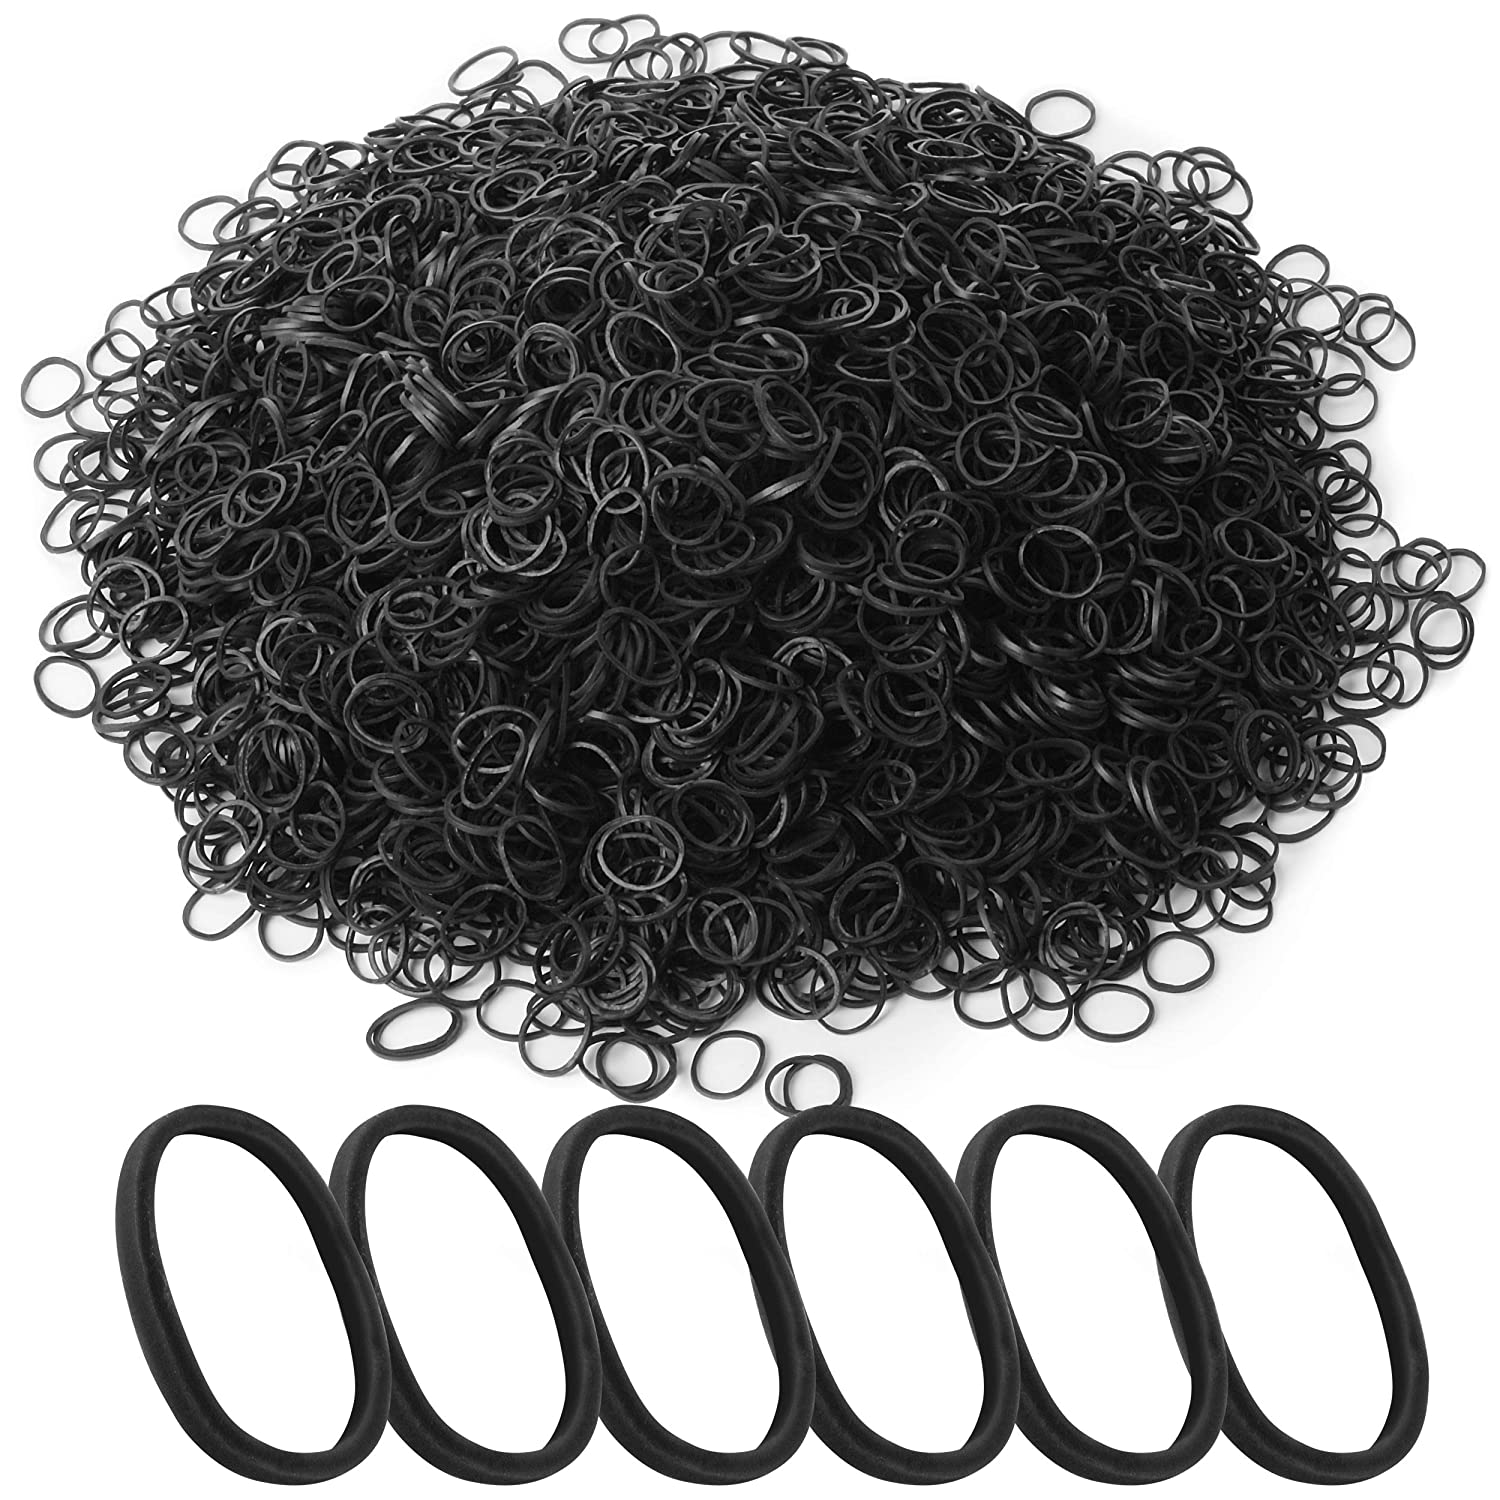 Mr. Pen- Rubber Bands for Hair, 2400 Pack, Black Rubber Bands, Hair Rubber  Bands, Small Hair Ties, Small Rubber Bands for Hair, Elastic Hair Bands